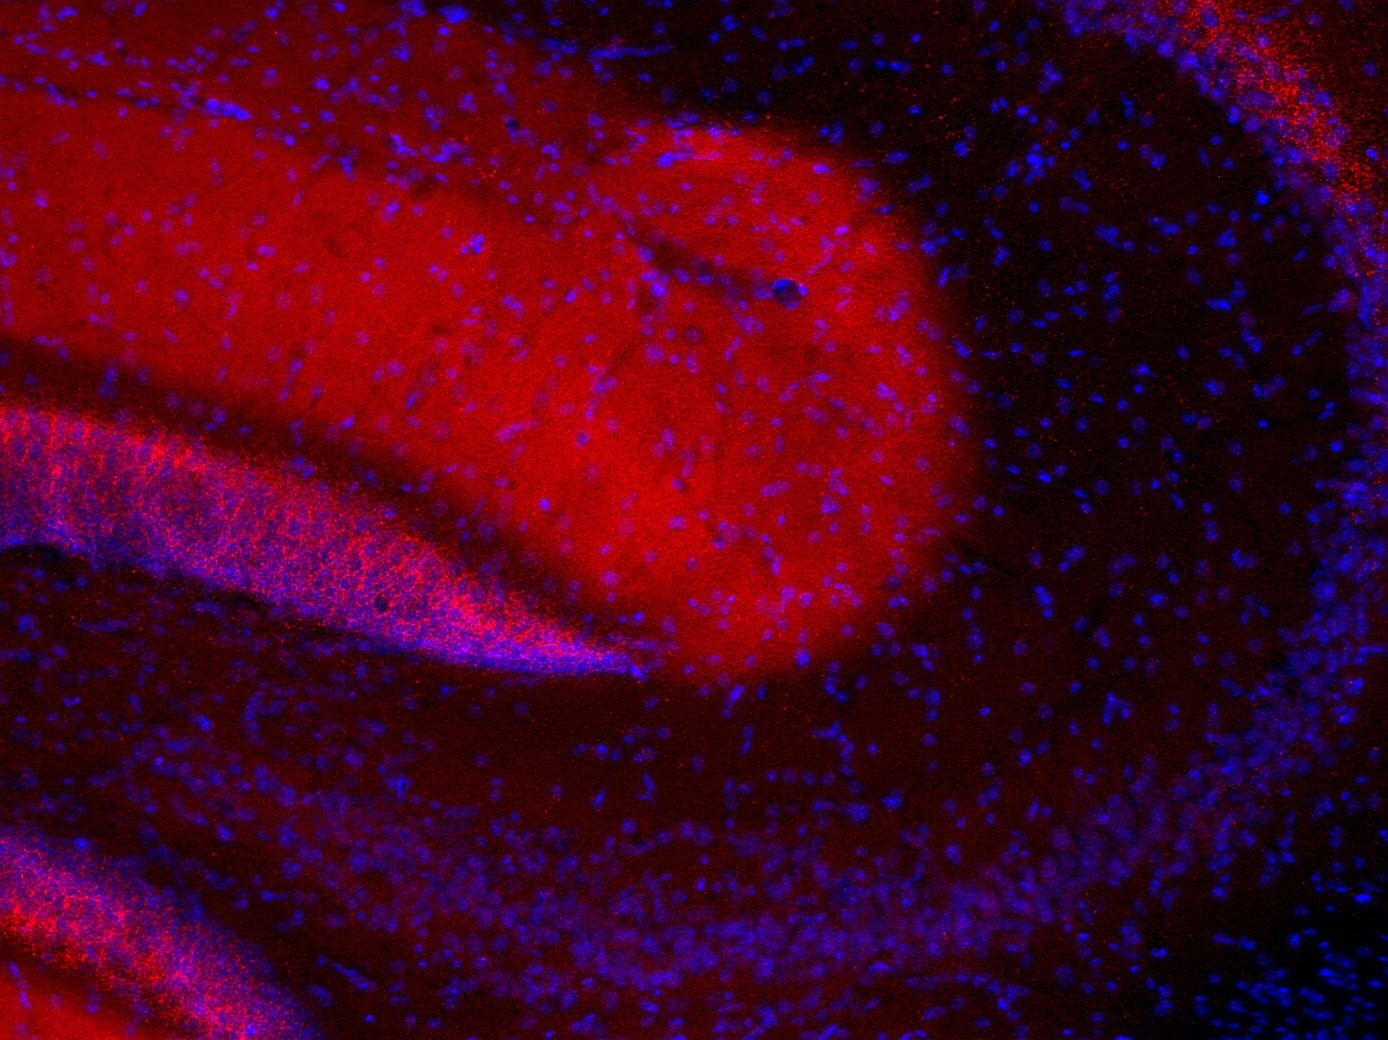 PFA固定マウス海馬切片の免疫組織染色像